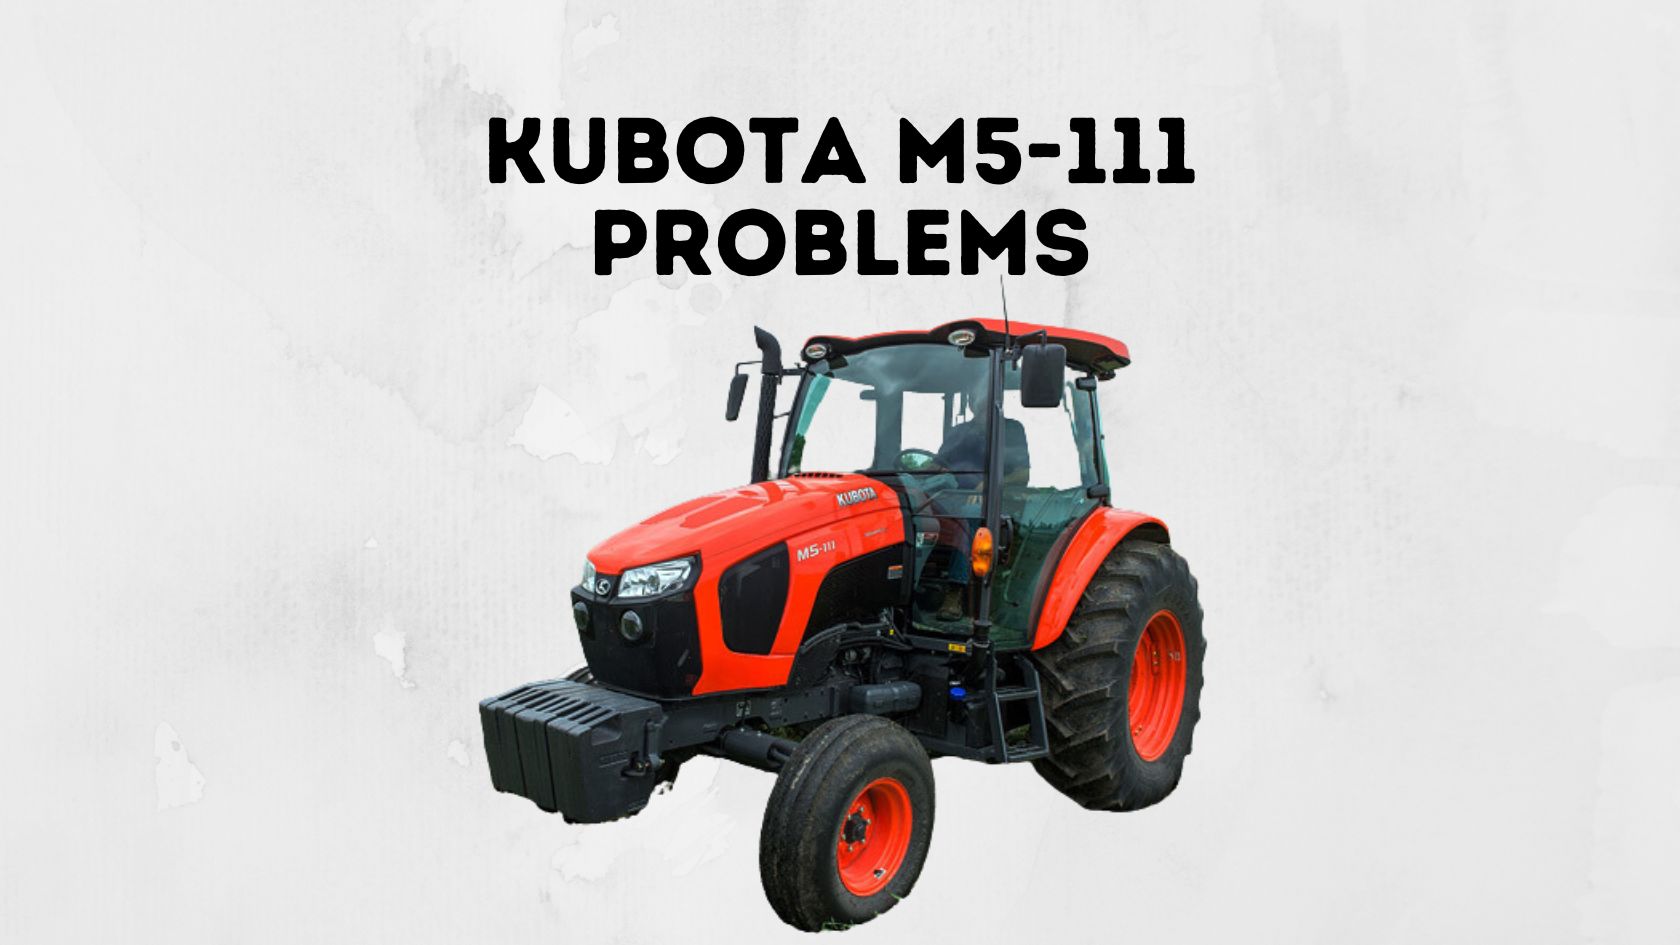 Kubota M5-111 Problems